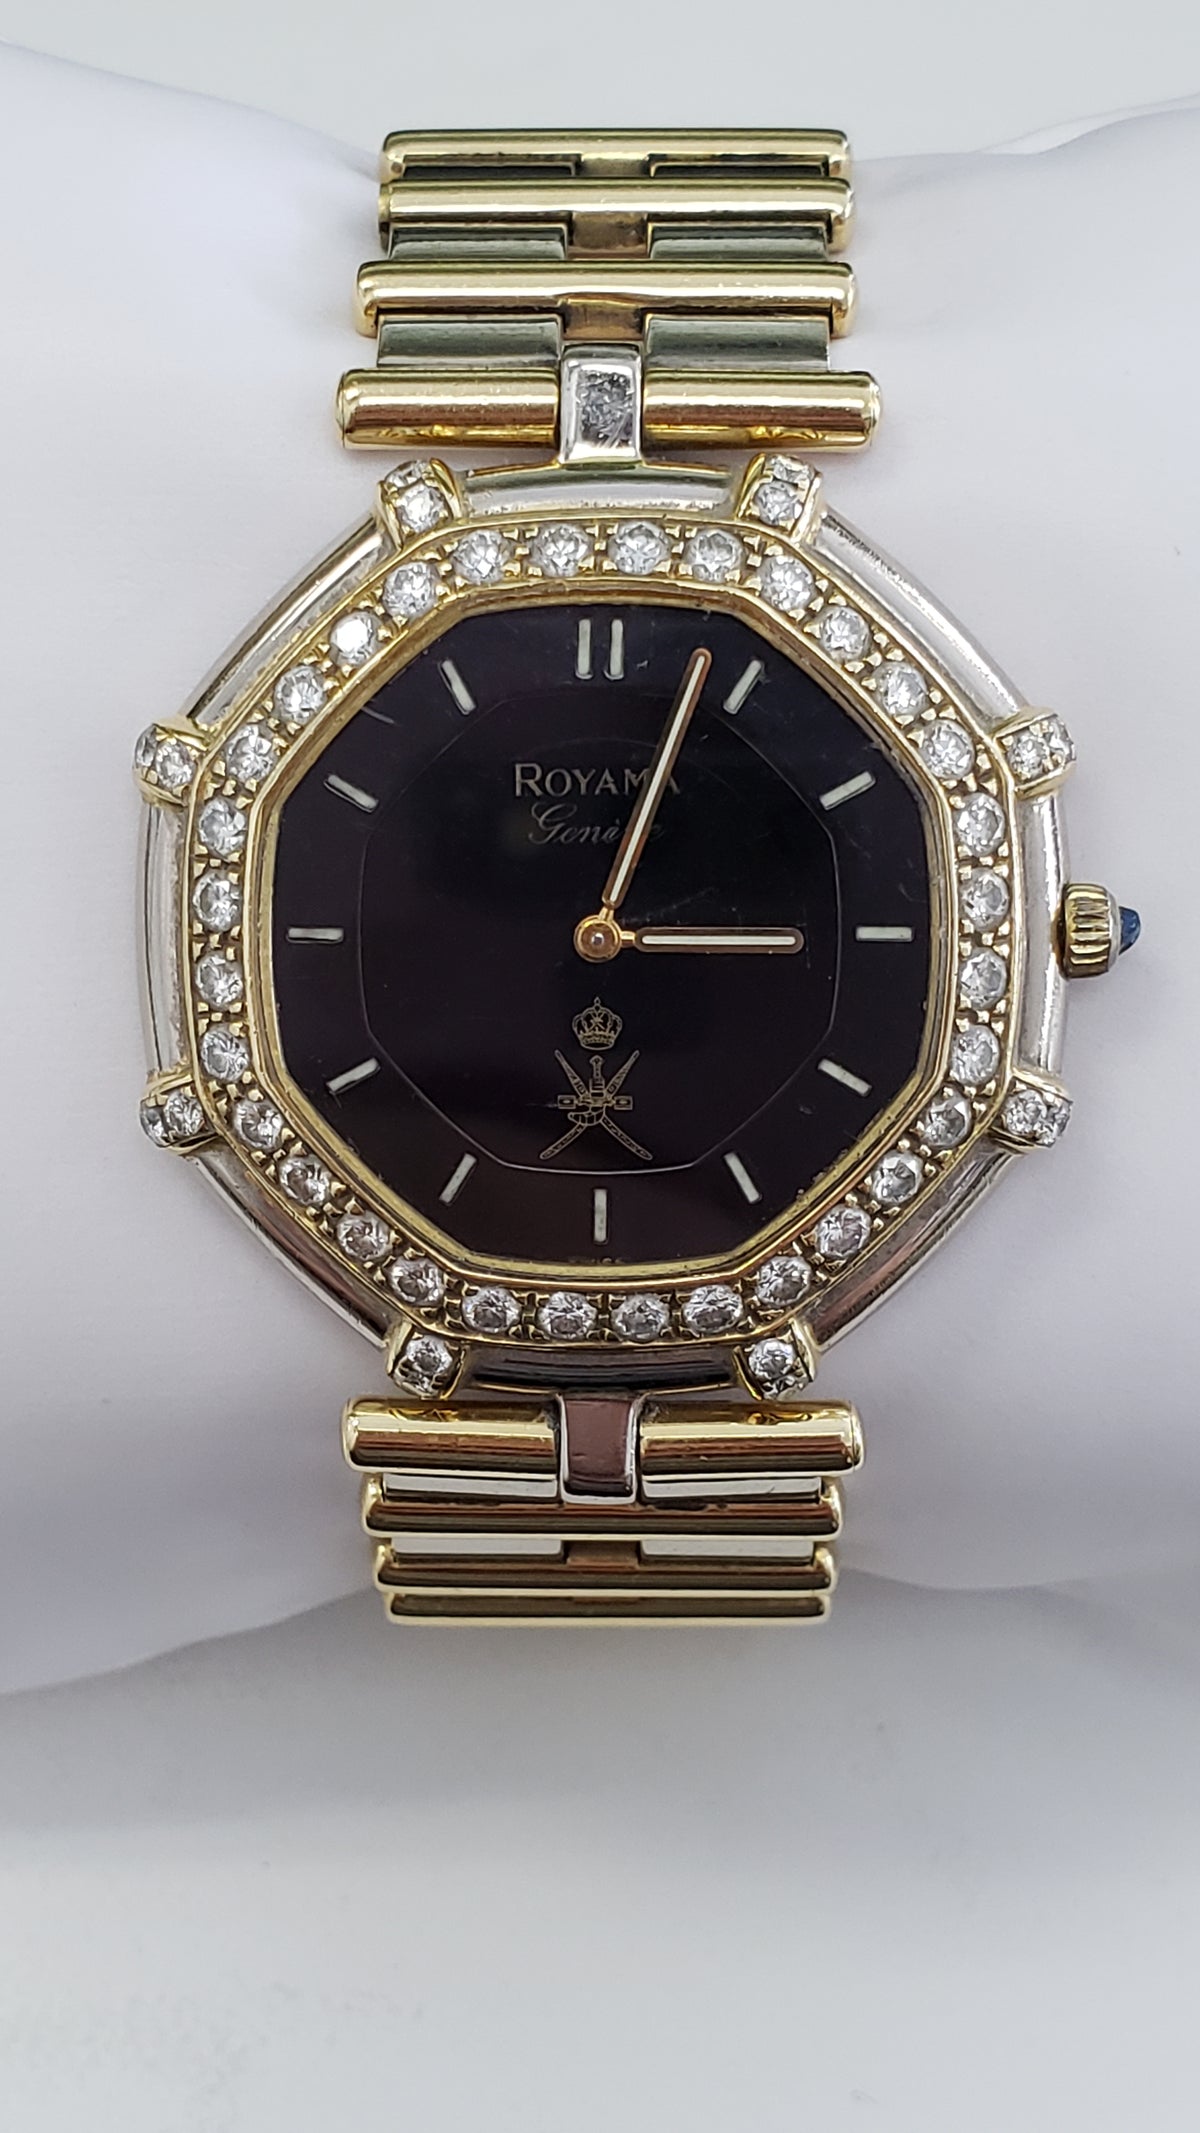 Gerald Genta Royama Geneve 18K and Stainless Steel Diamond Watch Preowned